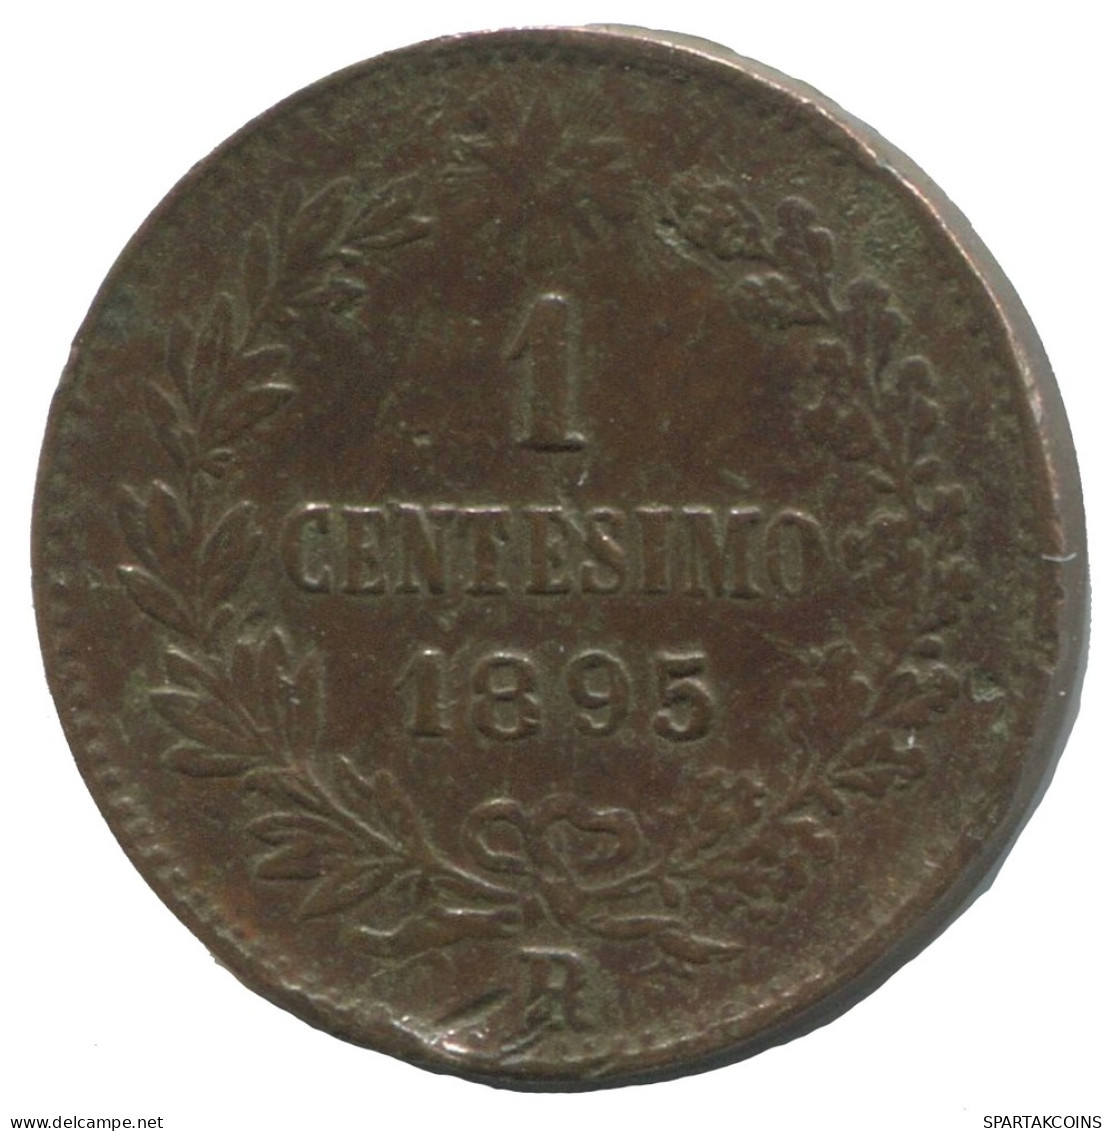 ITALY 1 Centesimo 1895 R Umberto I #AC186.8.U - Parma